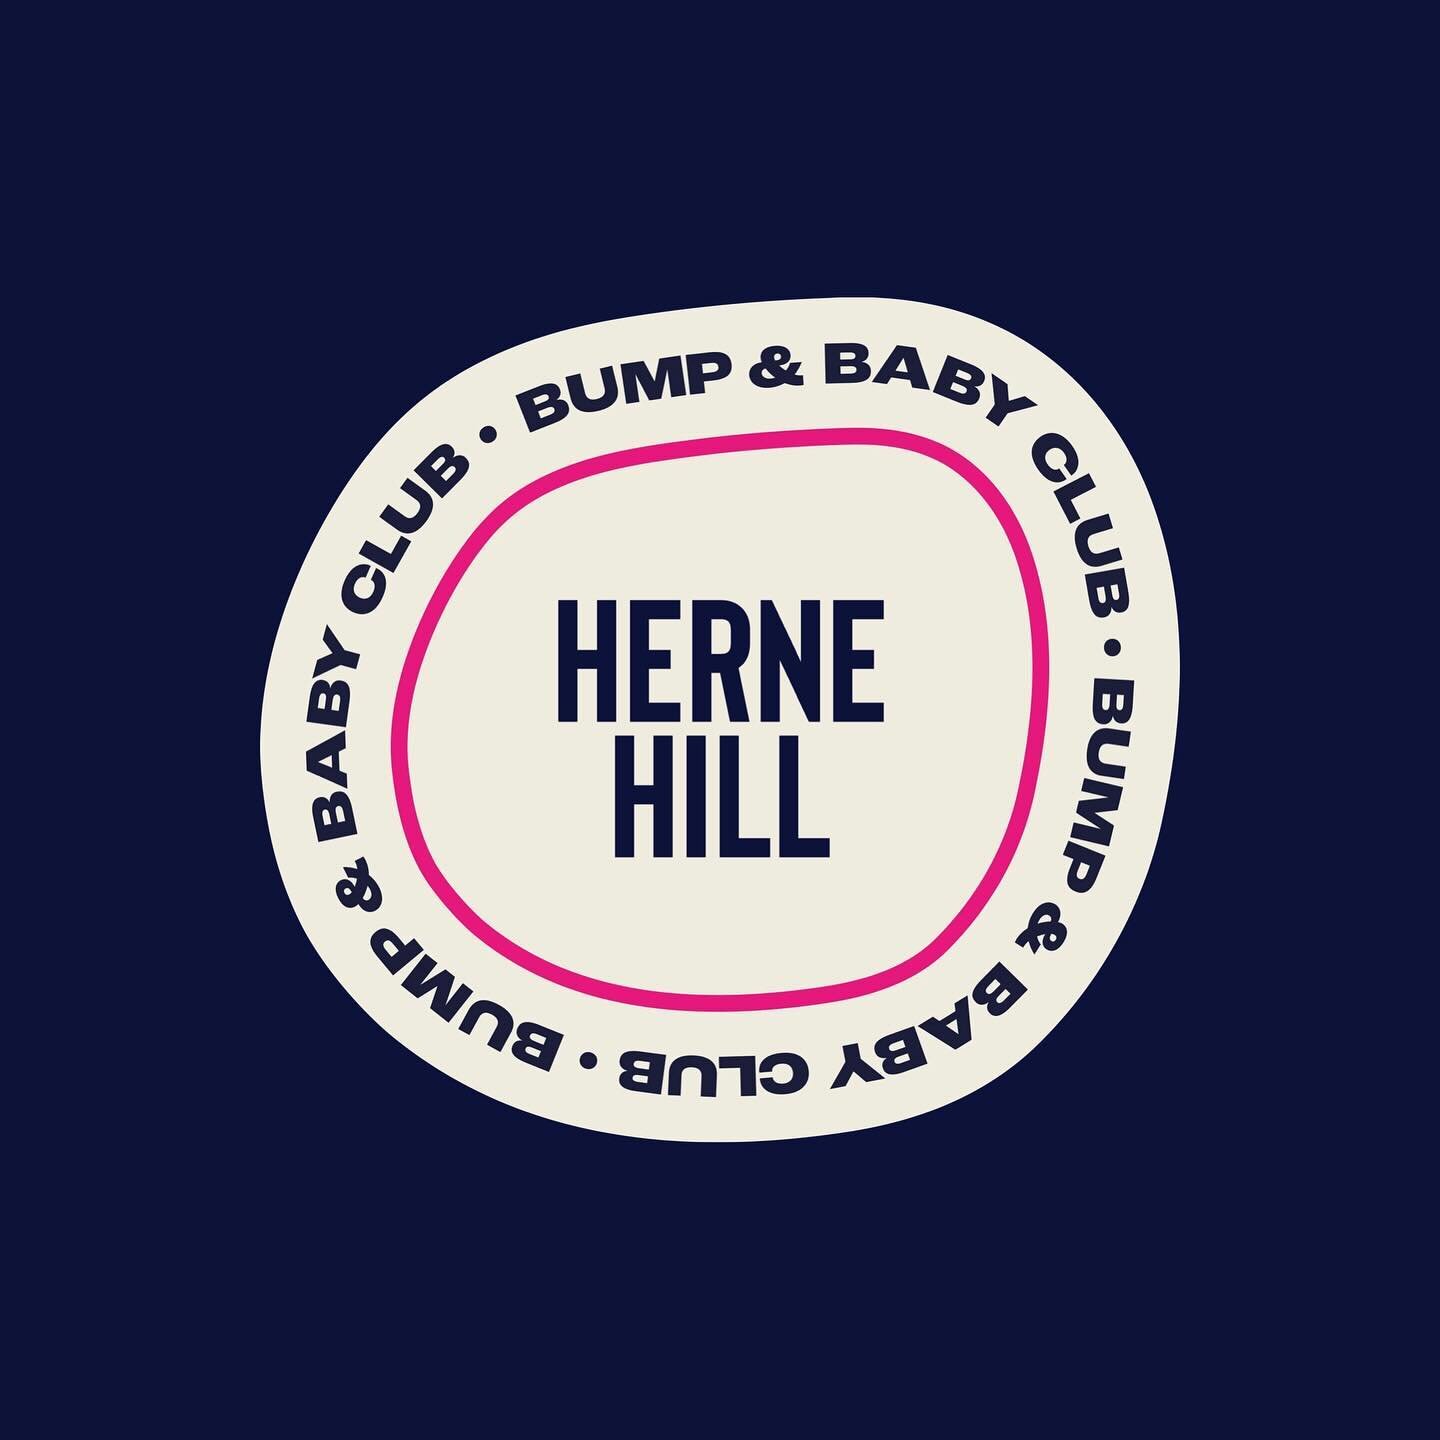 Our beautiful Herne Hill Club, @thehalfmoonpub 😍 

#bumpandbabyclubhernehill #hernehillantenatalclasses #antenatalclasseshernehill